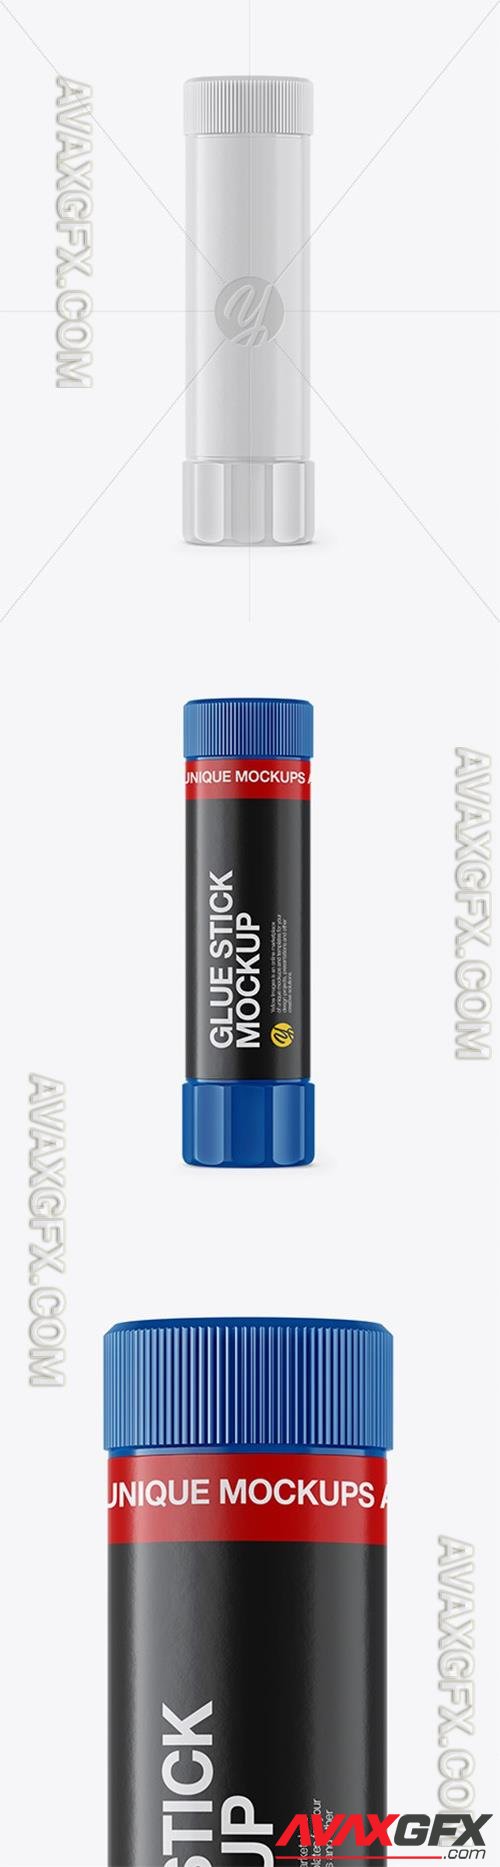 Glossy Glue Stick Mockup 48766 TIF